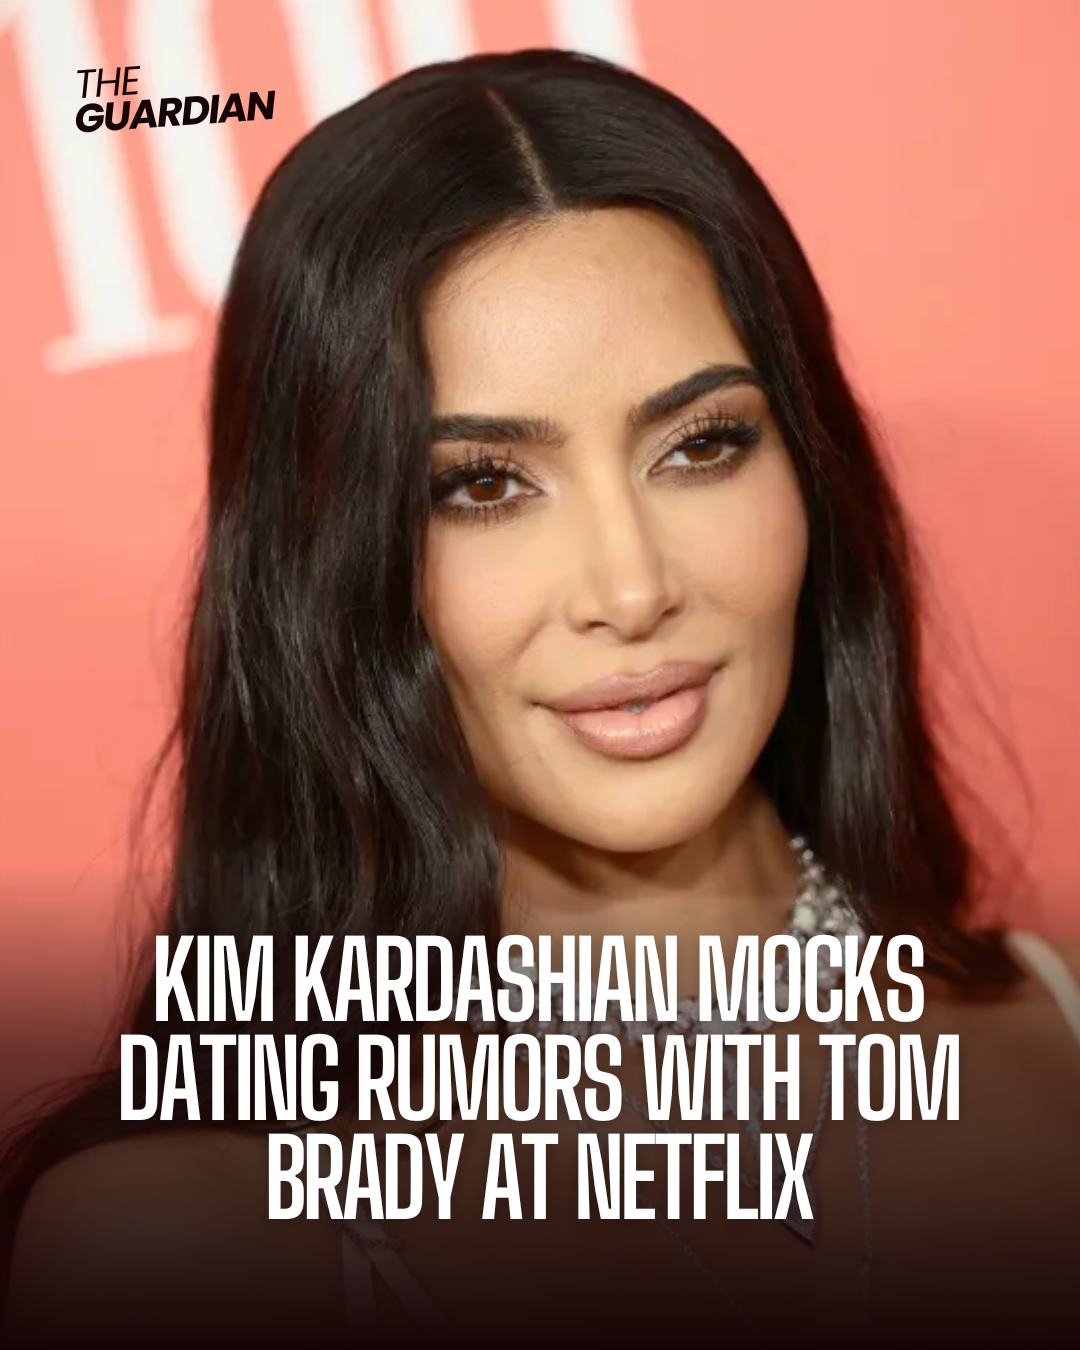 Kim Kardashian seemed astonished by retired quarterback Tom Brady's Netflix roast, where she addressed dating rumours.